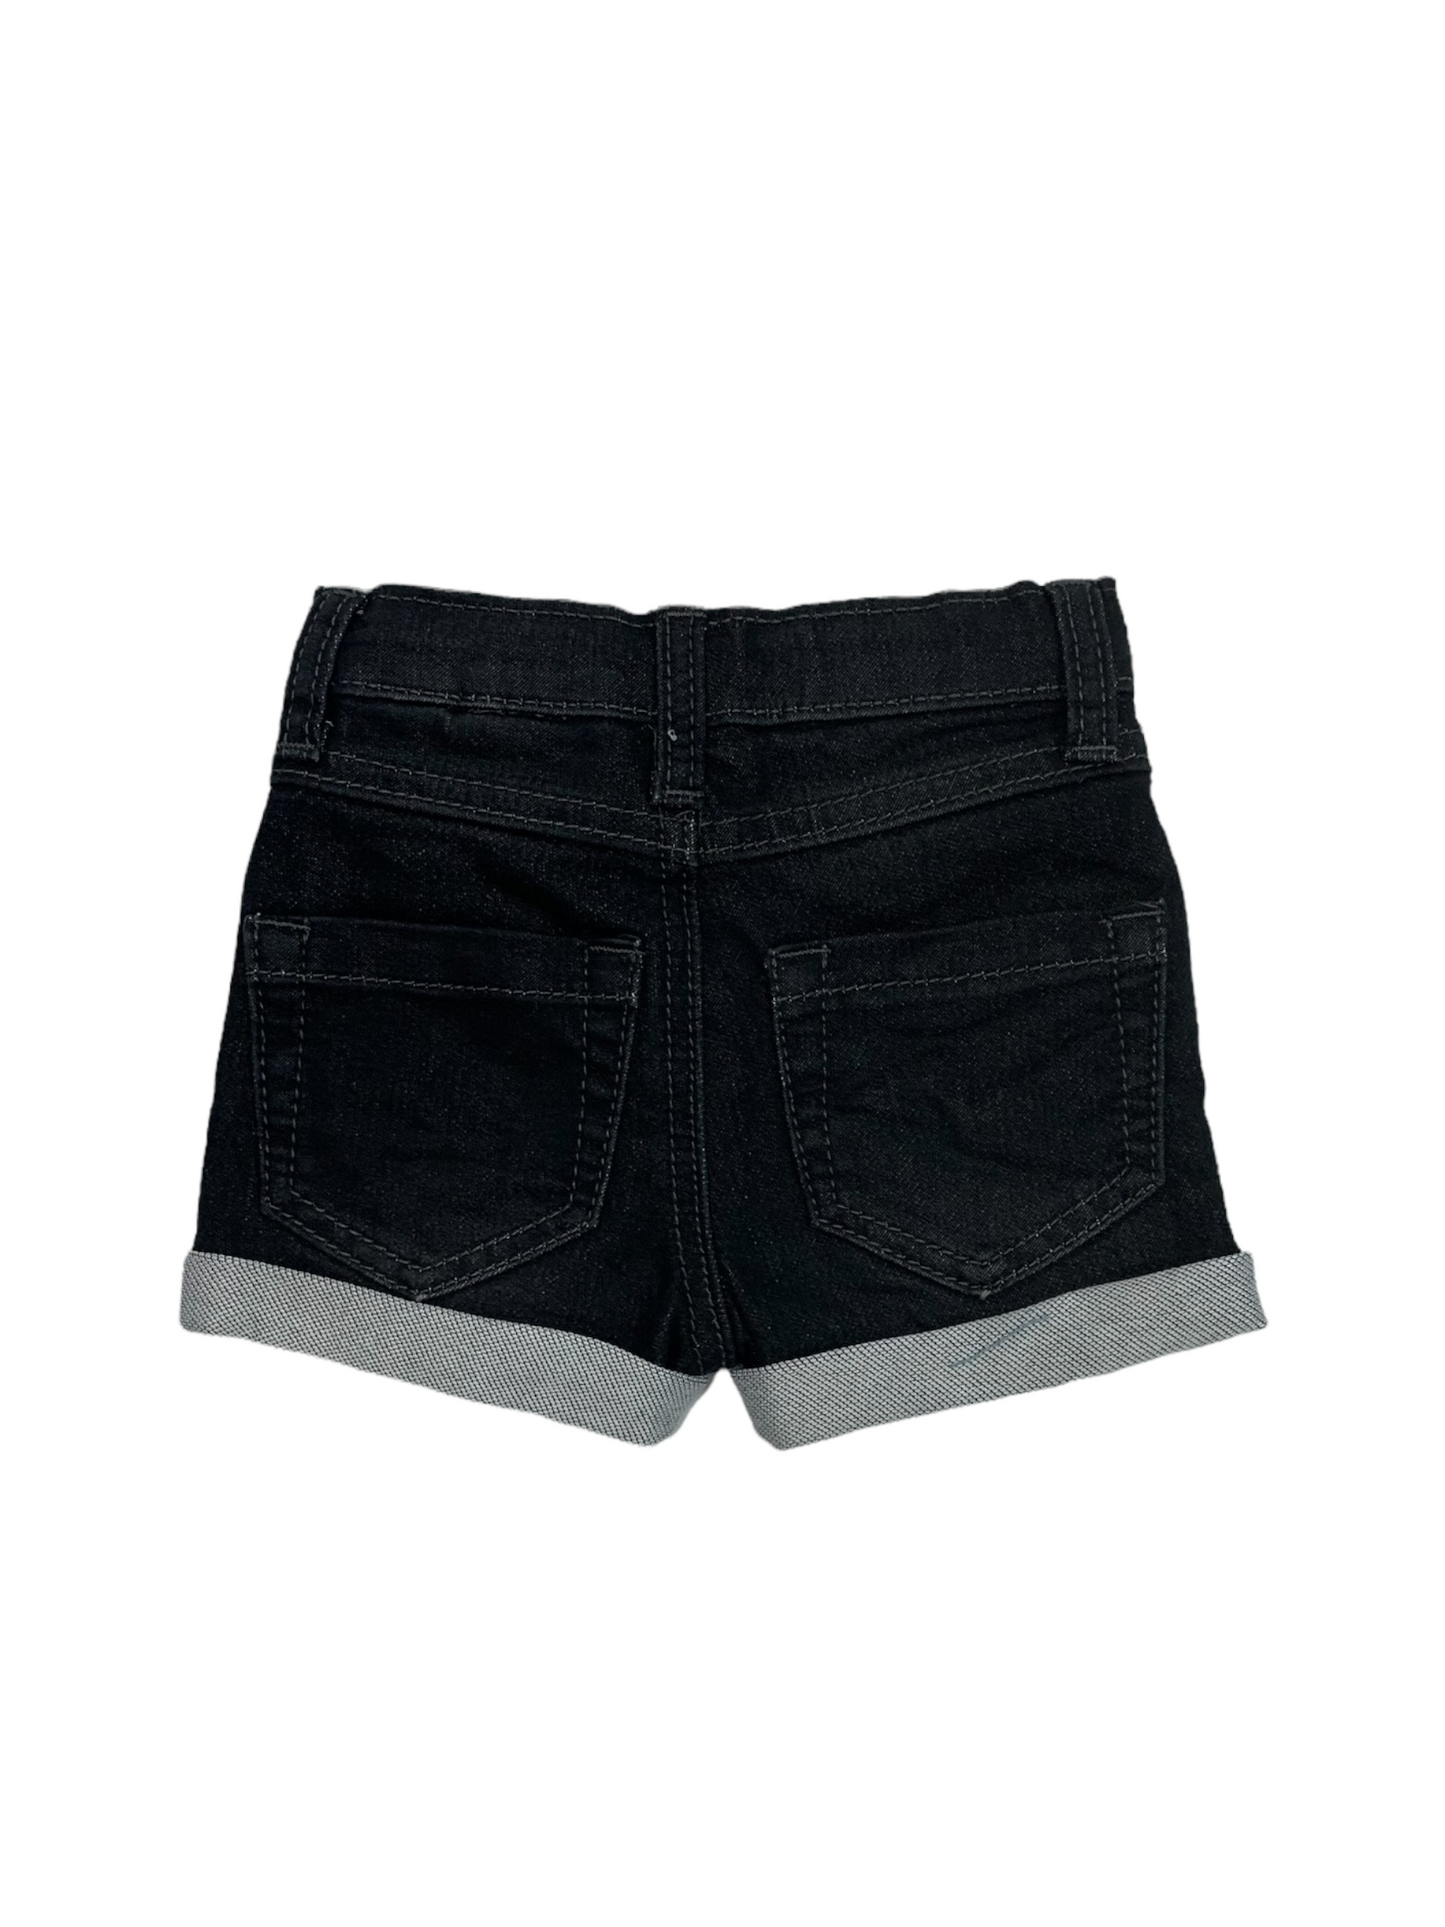 Black denim shorts for baby boy 6 to 24 months